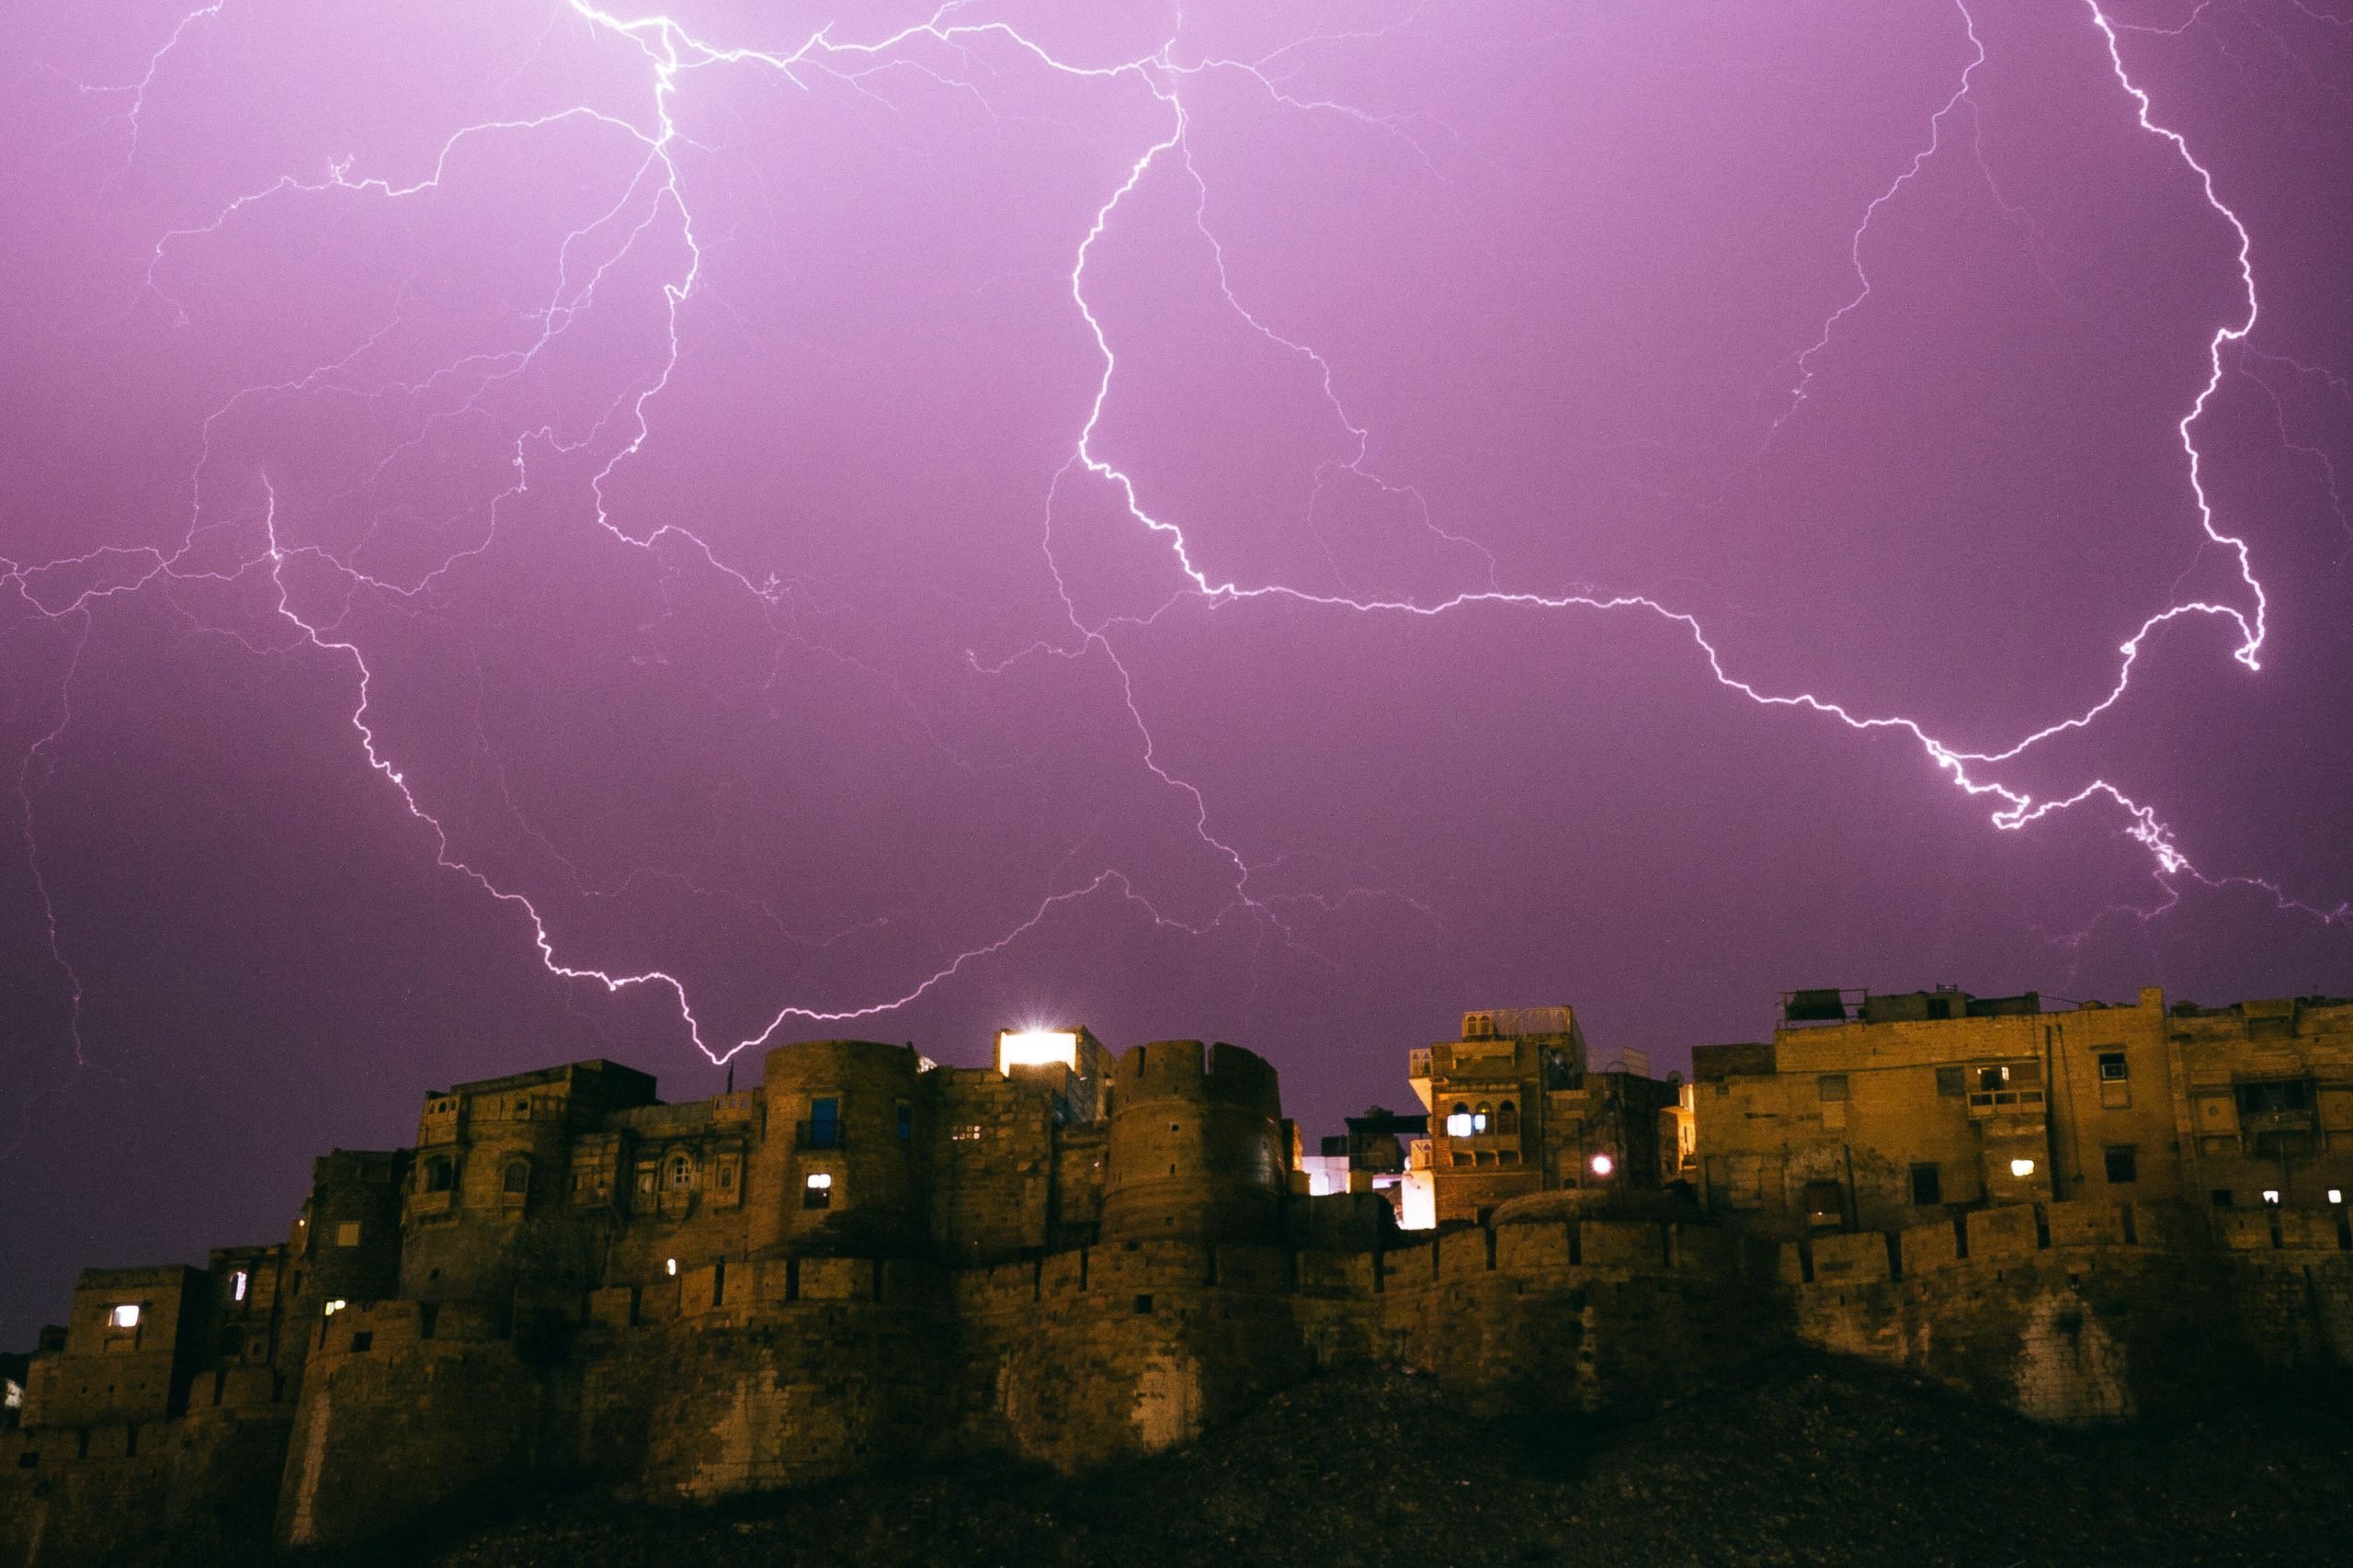 Lightning strikes above the city of Jaisalmer in Rajasthan, India (Image: Alamy)